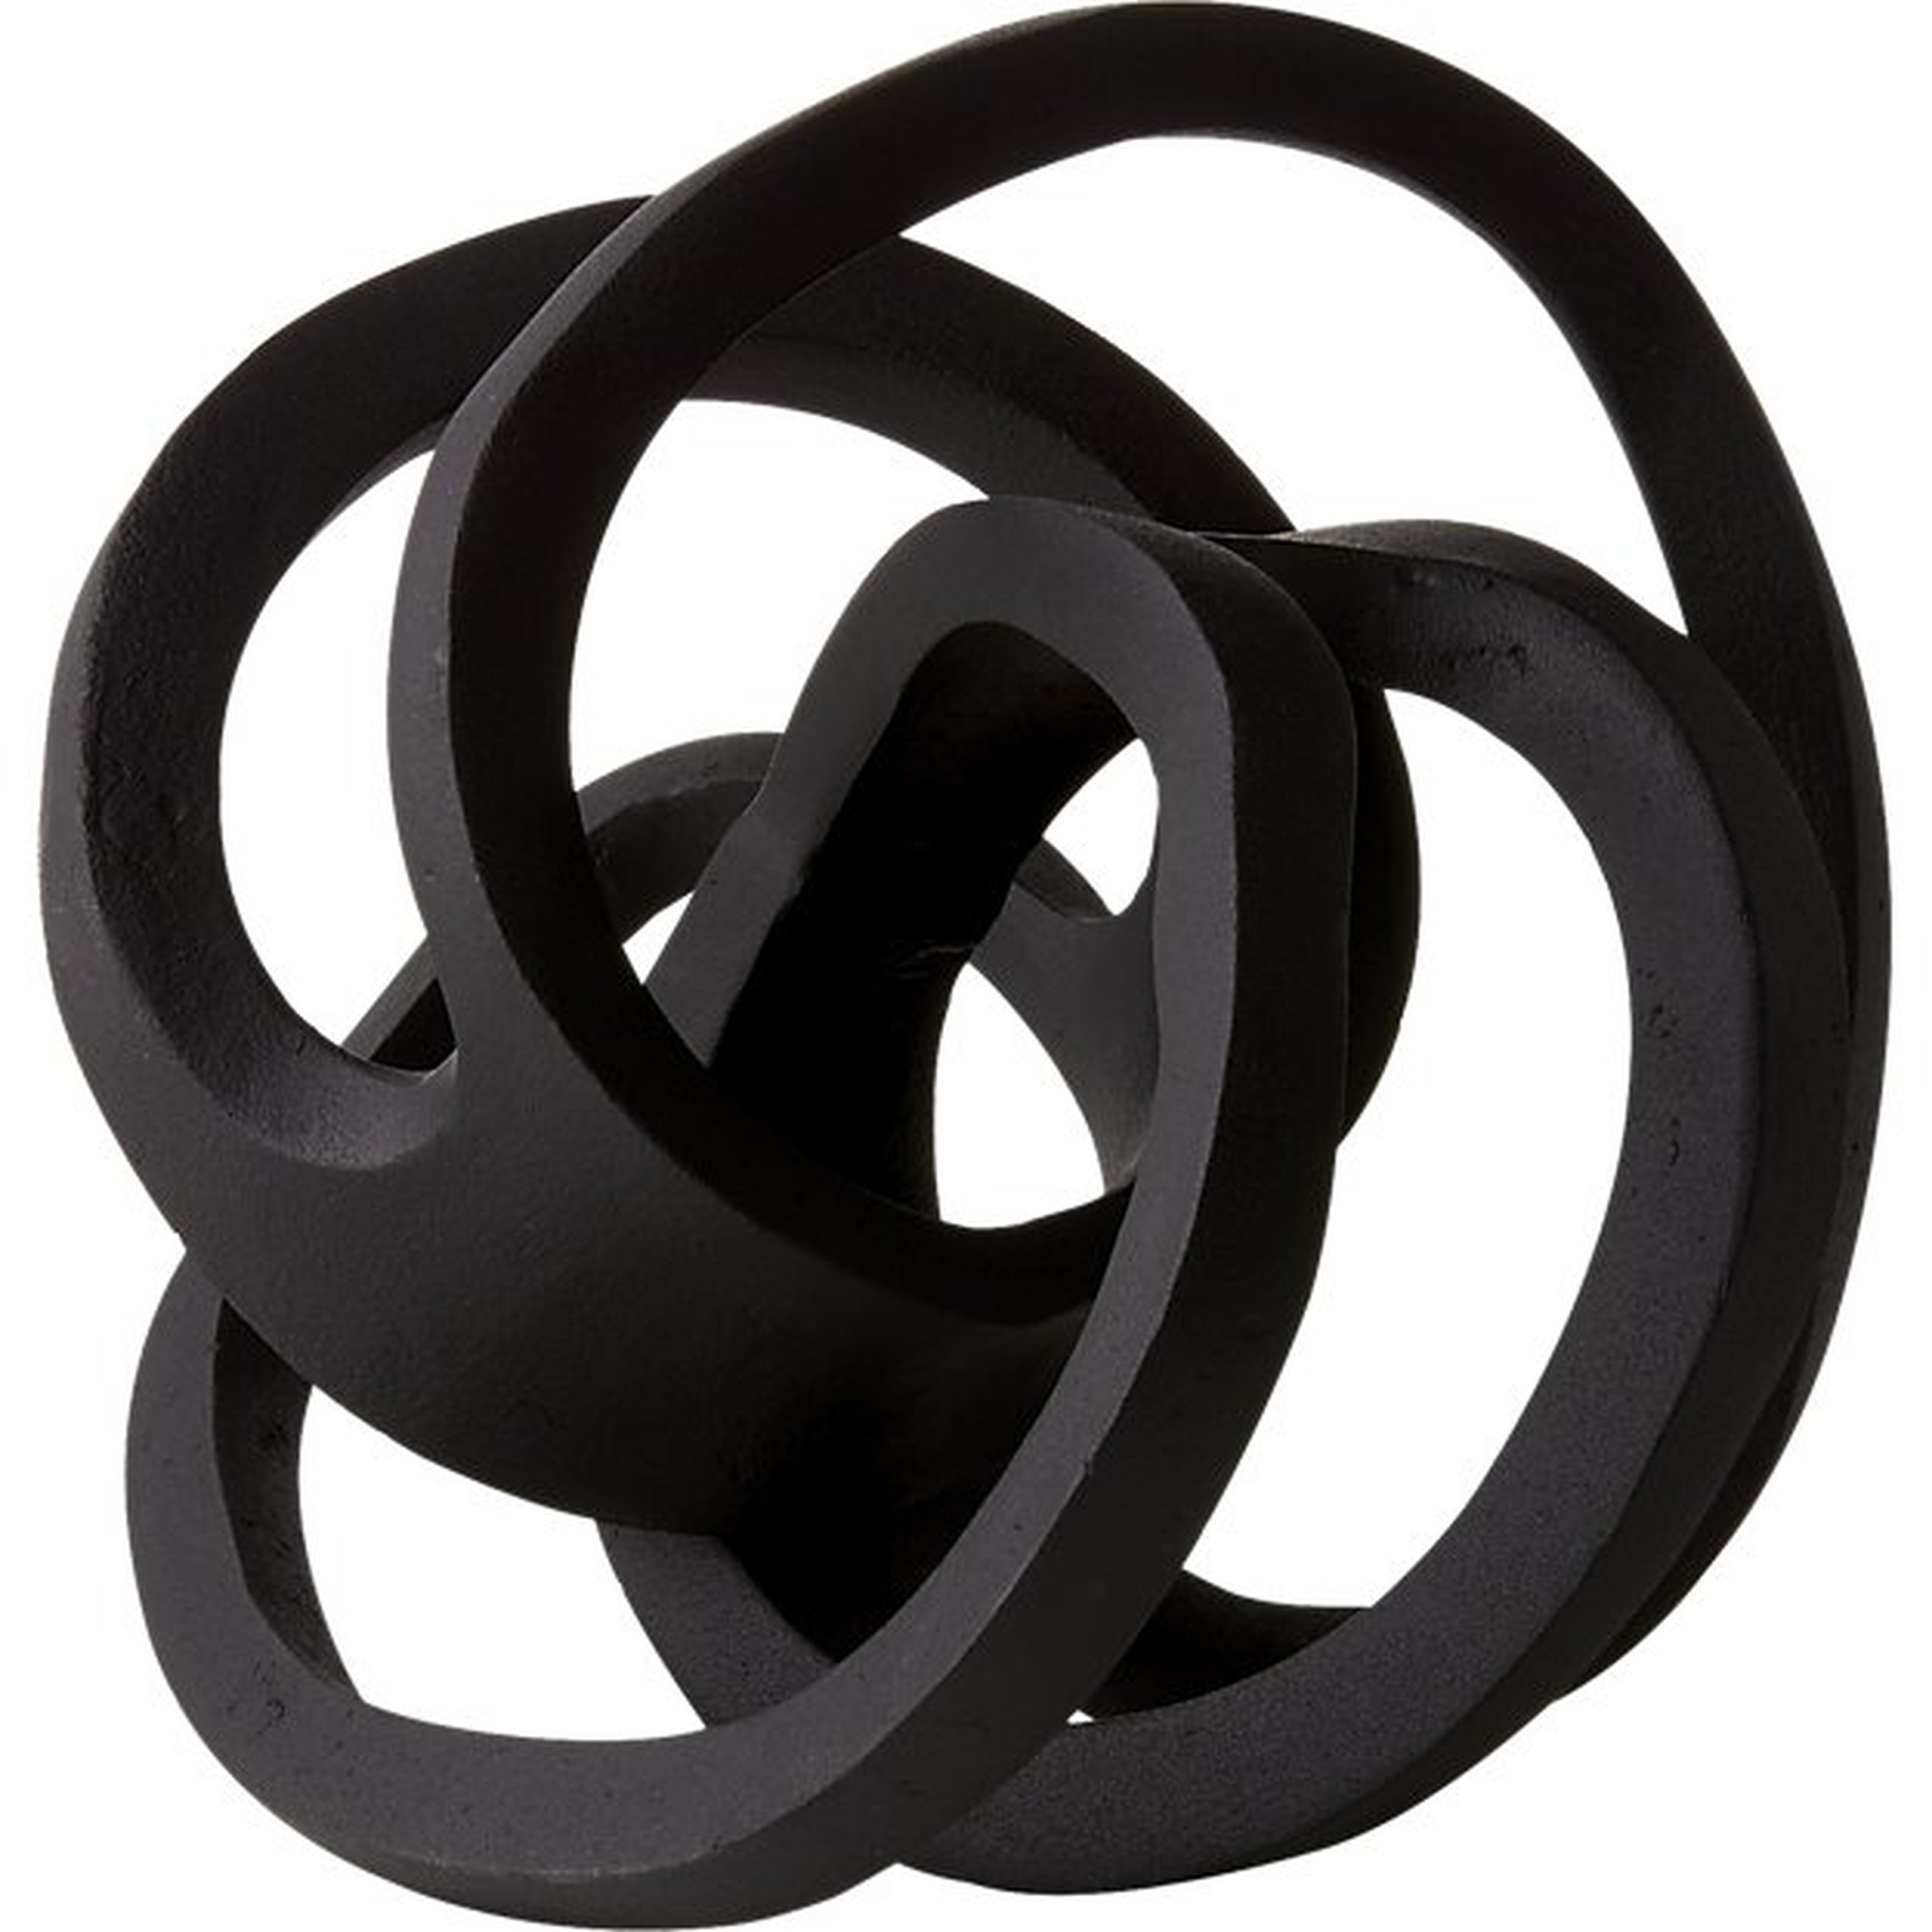 Infinity Black Knot Sculpture - CB2